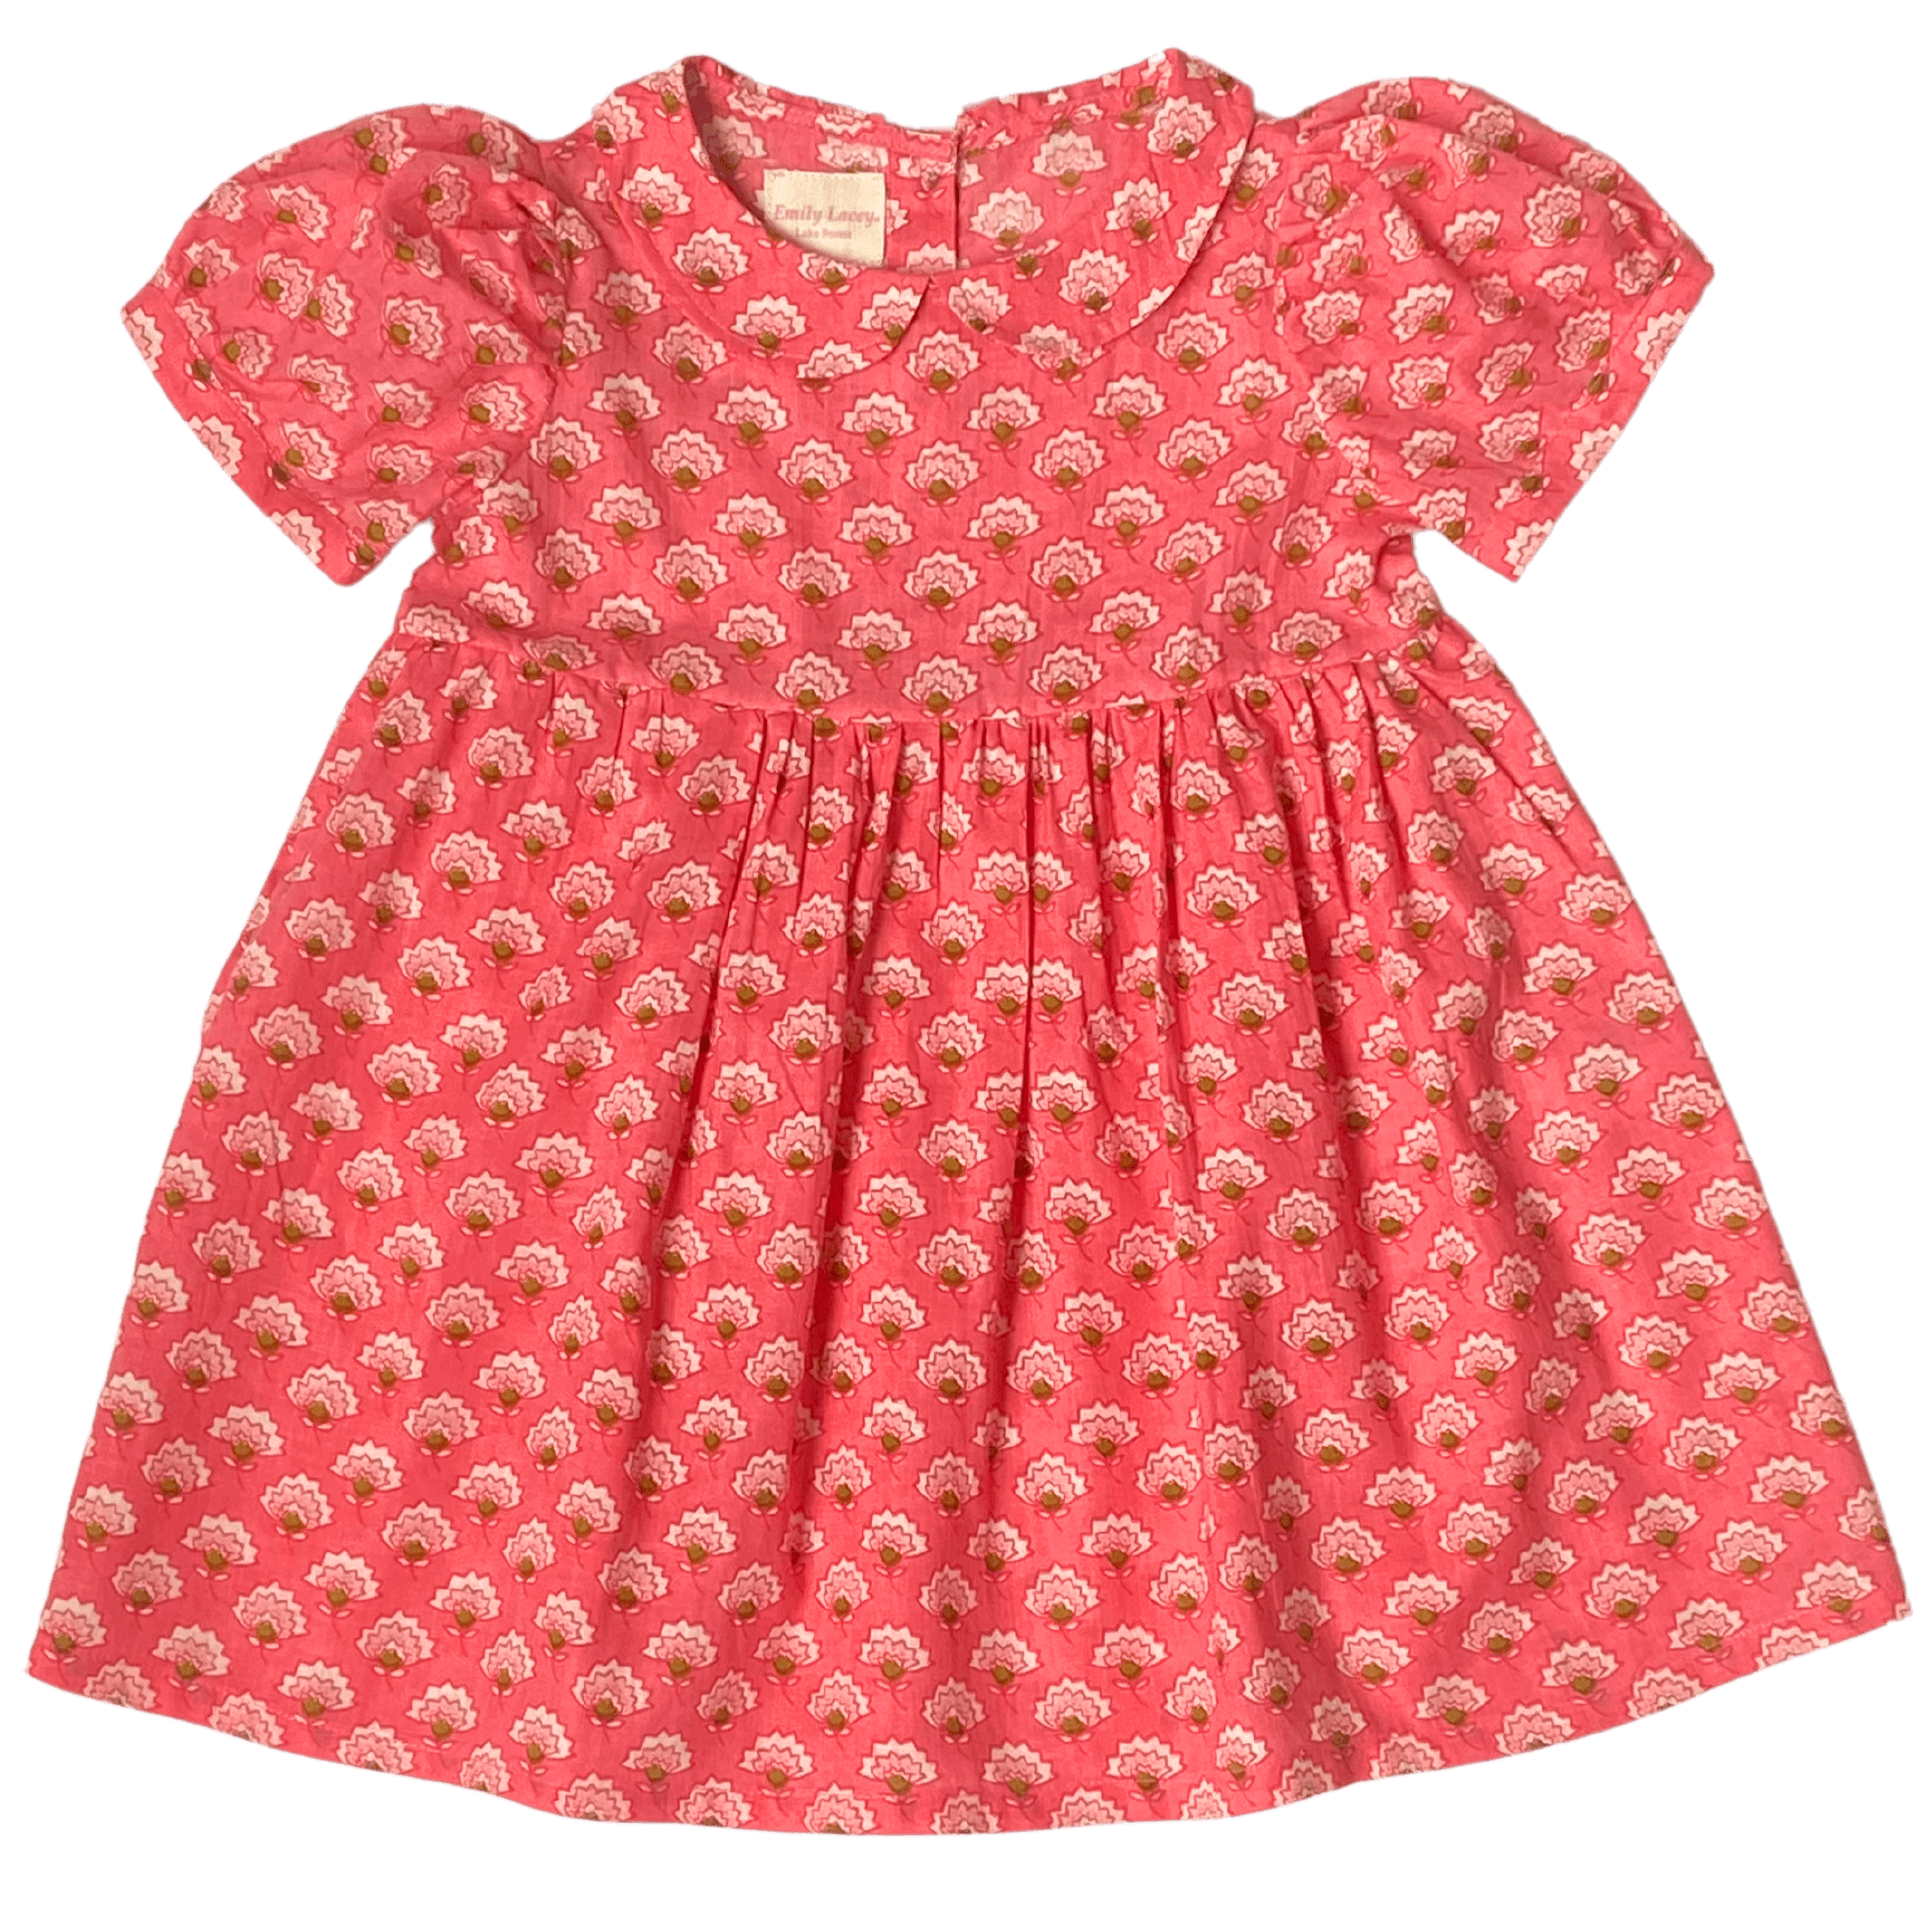 Pinkberry Sample Dress